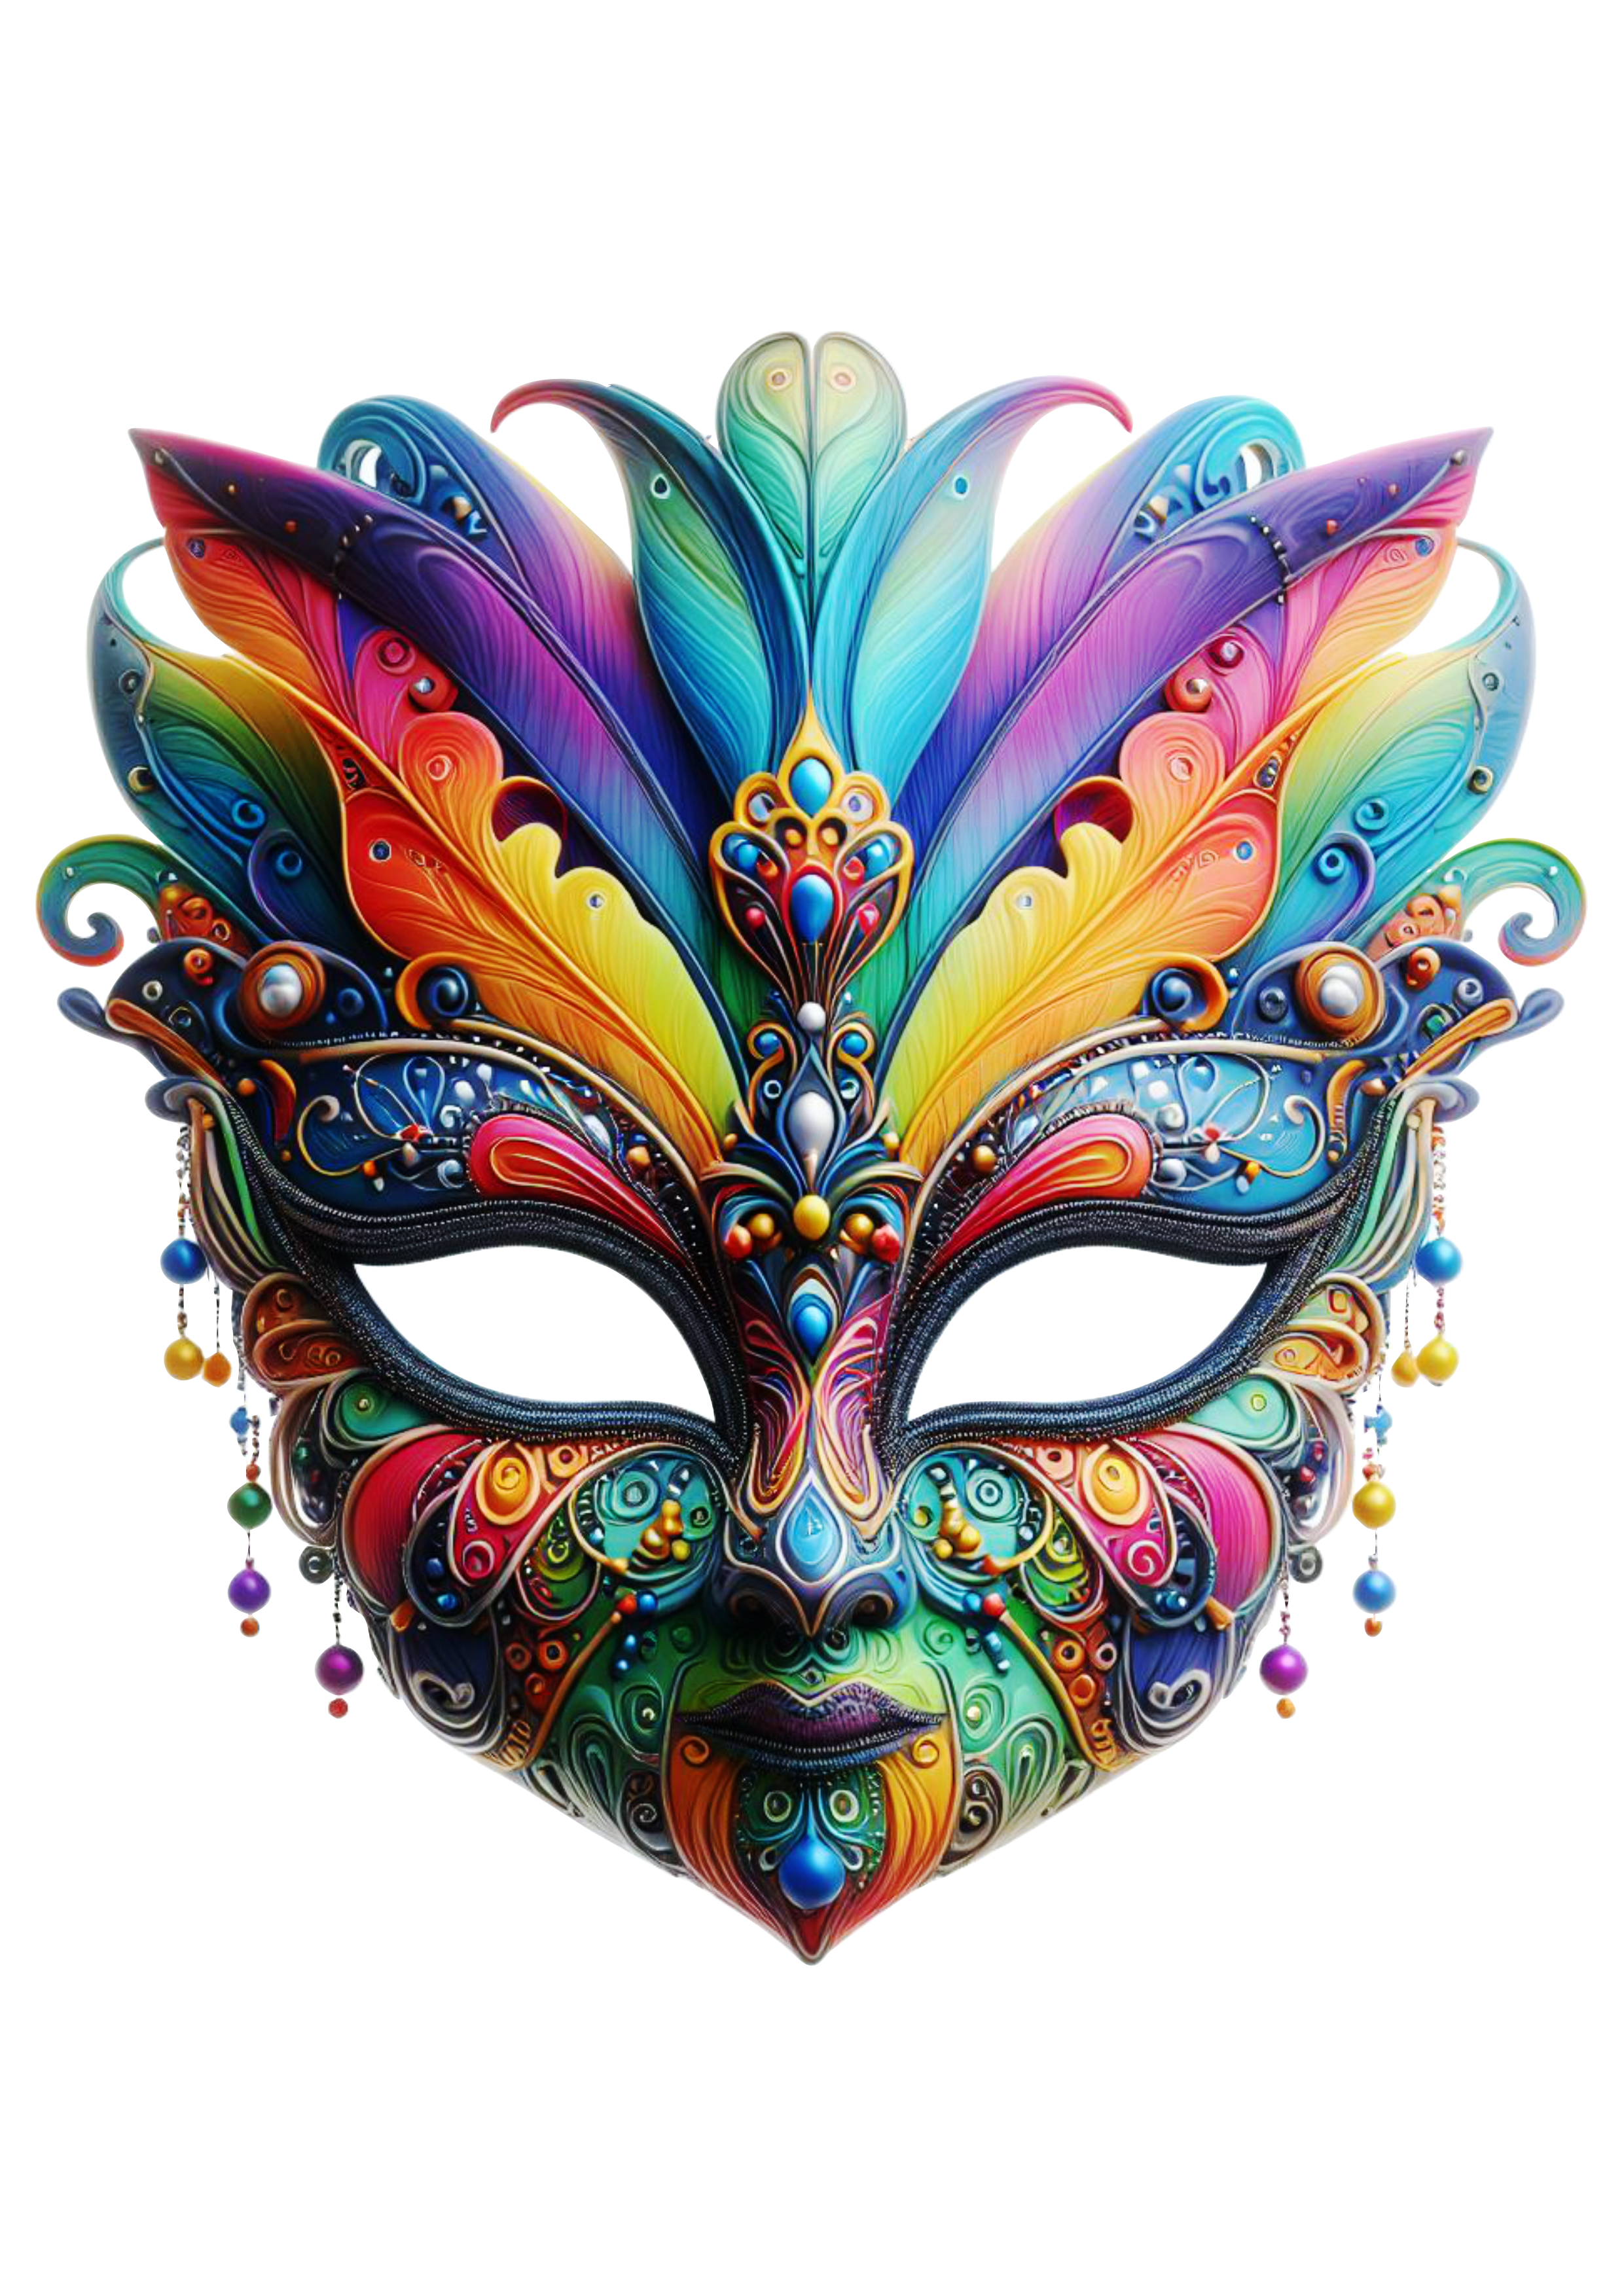 Máscara de carnaval brilhante joias baile de máscaras png penas coloridas design artes gráficas